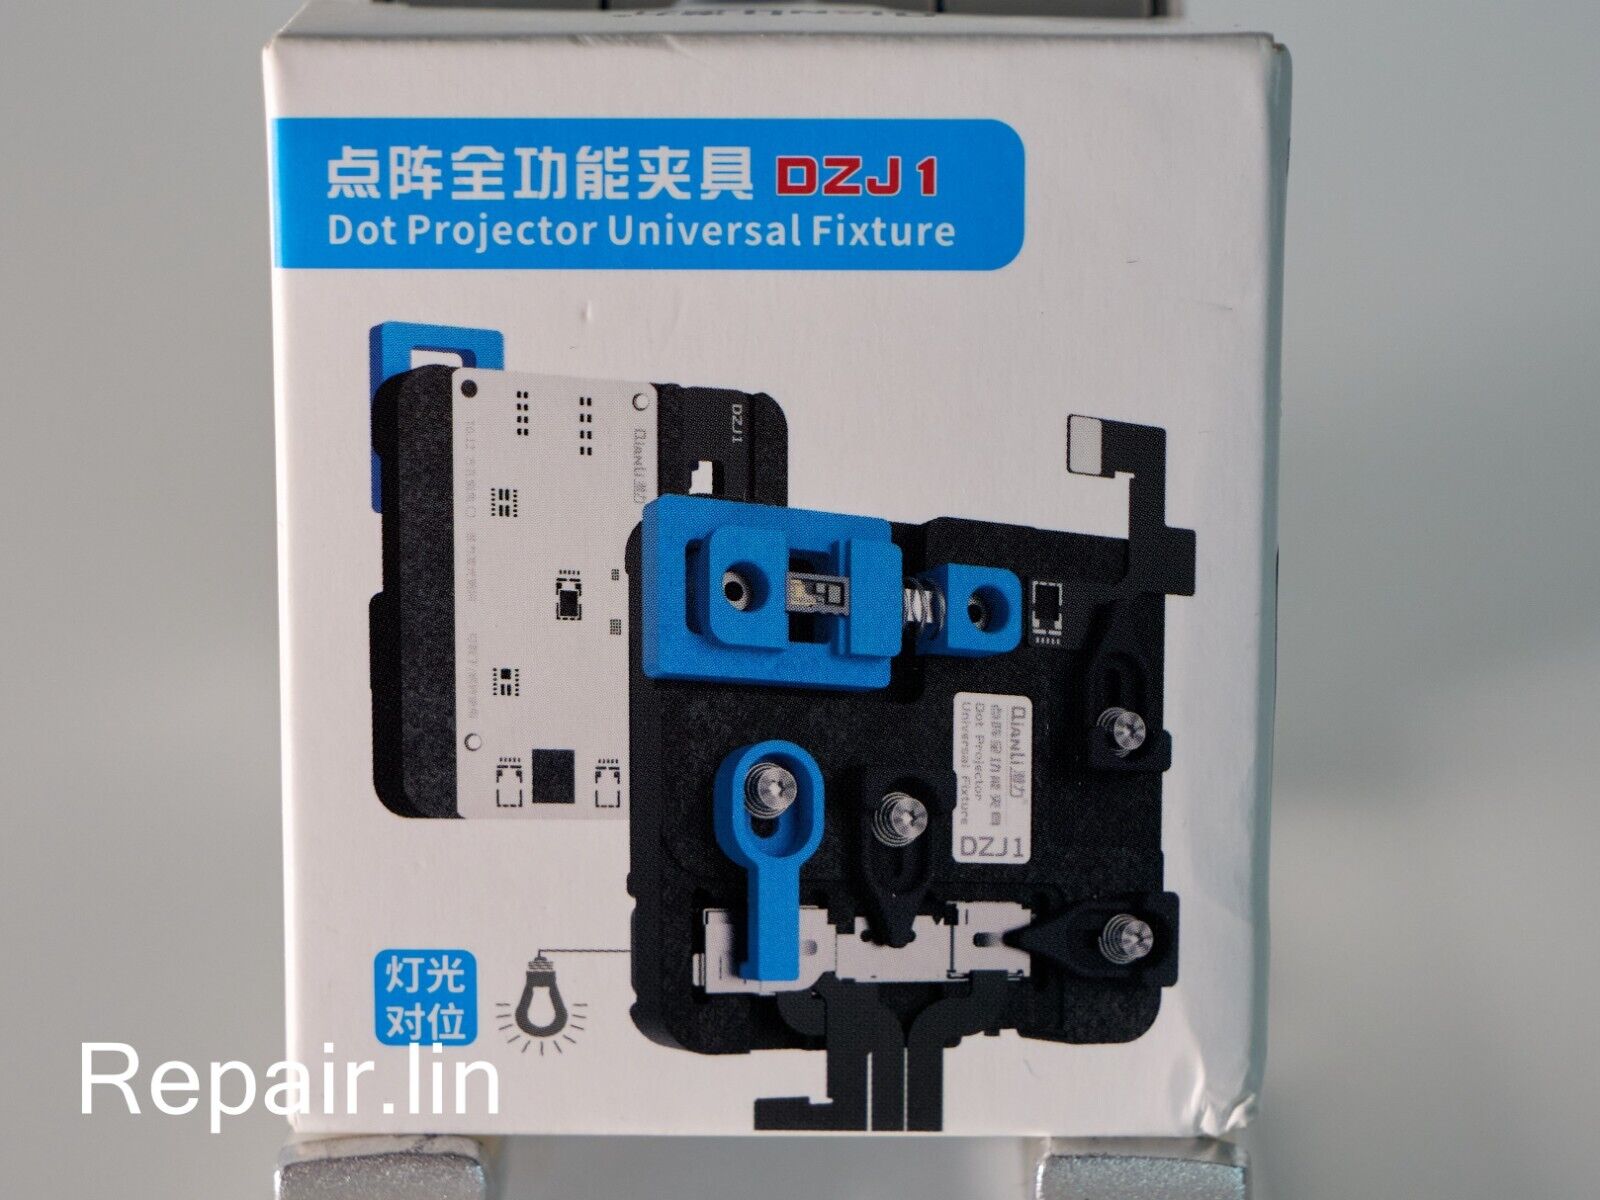 Qianli Dzj1 Dot Projector Universal Fixture For Iphone X-11 Pro Face Id